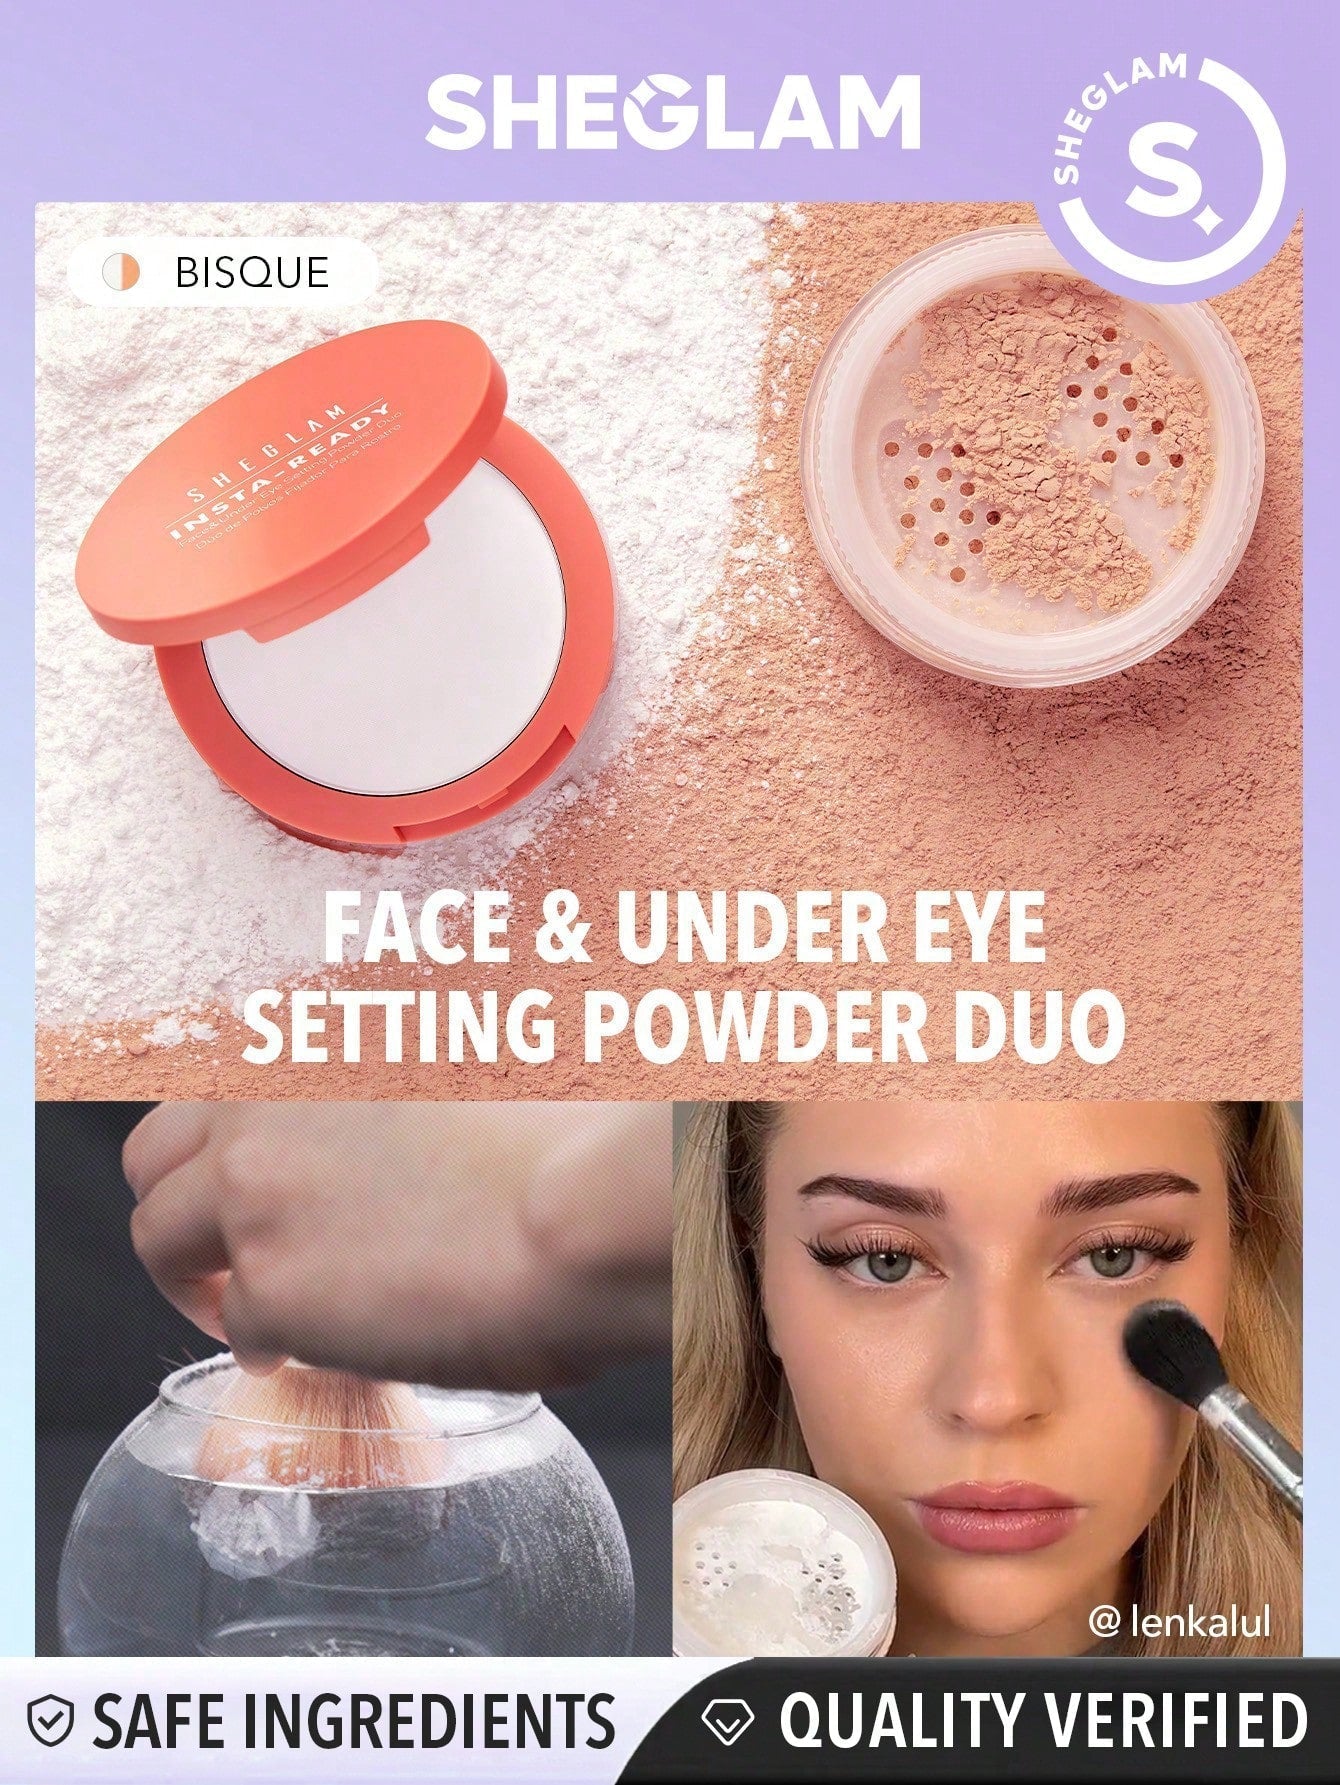 SHEGLAM Insta-Ready Face & Under Eye Setting Powder Duo - Negative Apparel